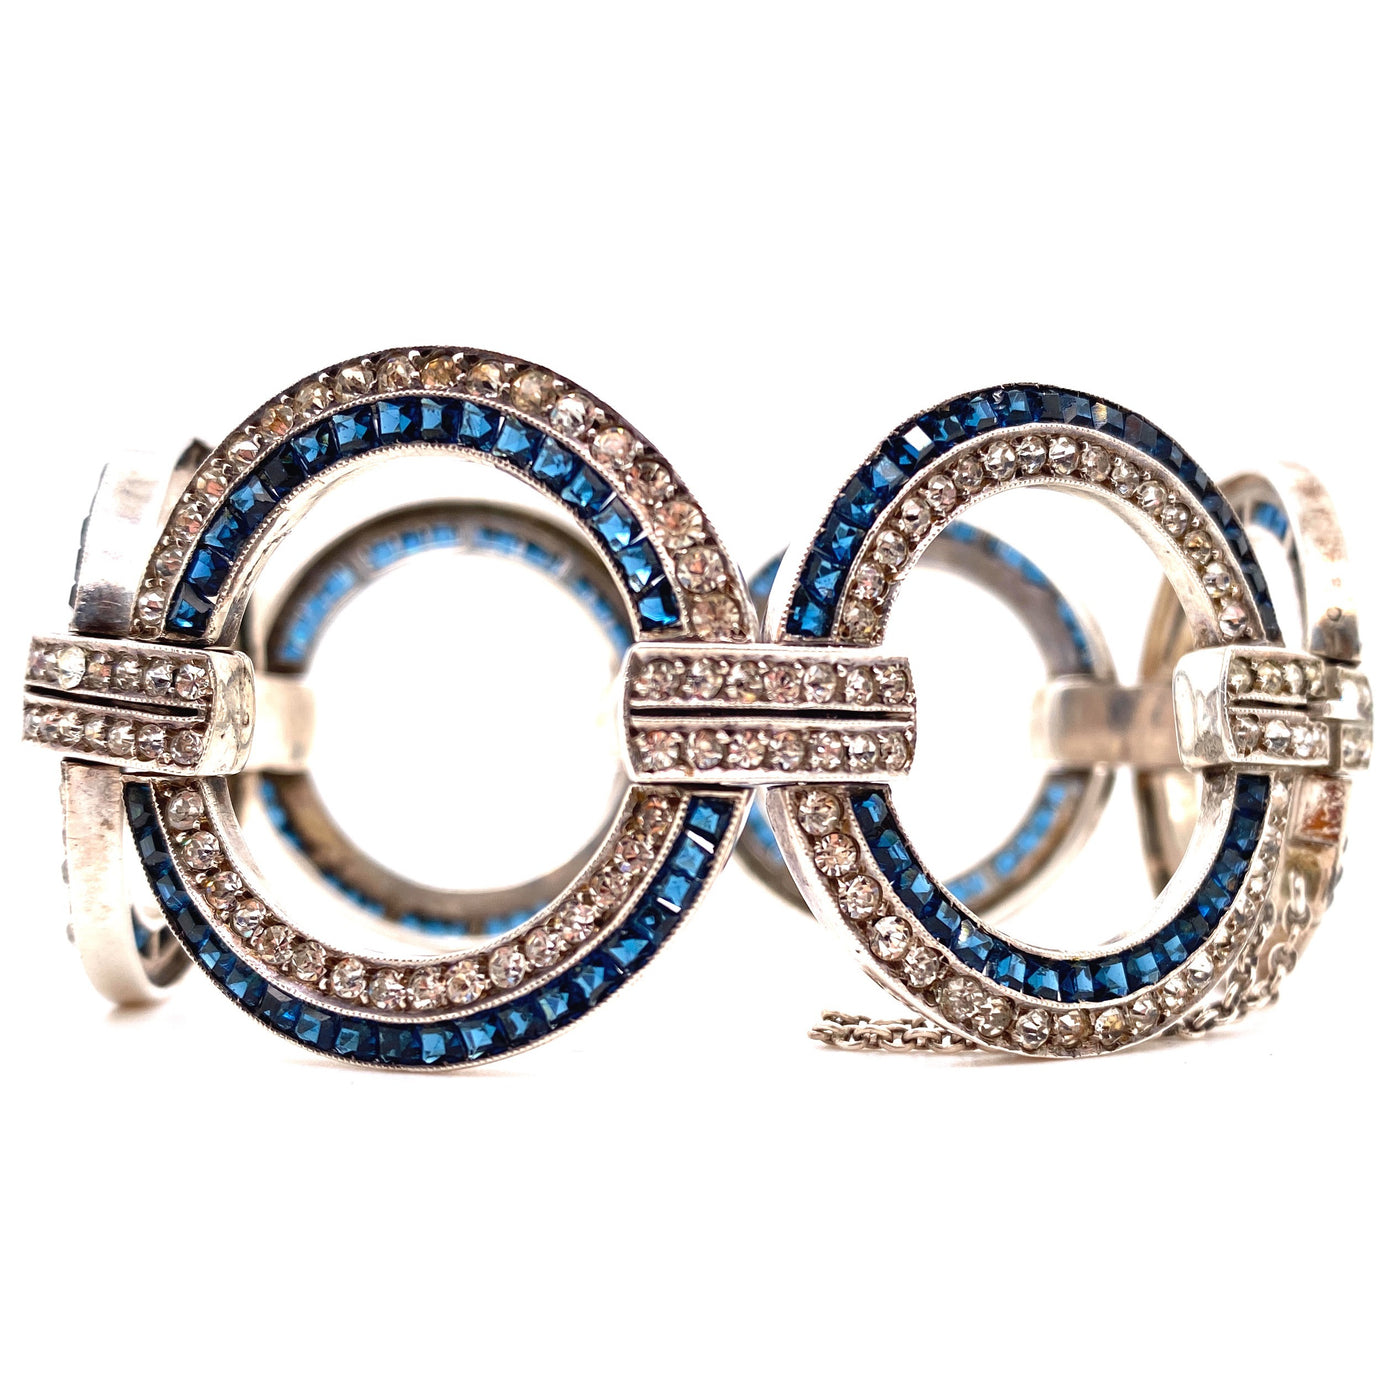 Olympic Rings - Silberarmband mit farbigen Steinen